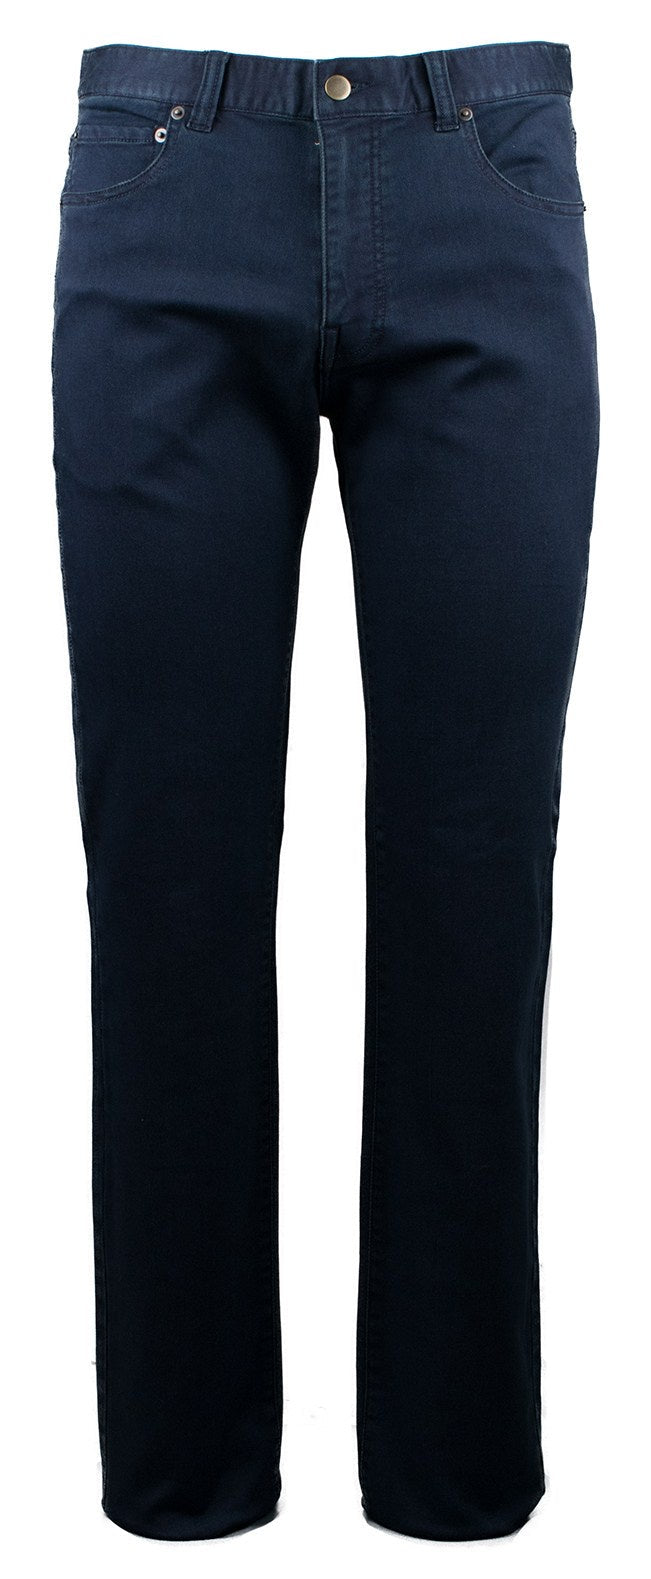 Innsbrook FYH323 Solden Jeans - Thomson's Suits Ltd - Indigo - 84 - 38744